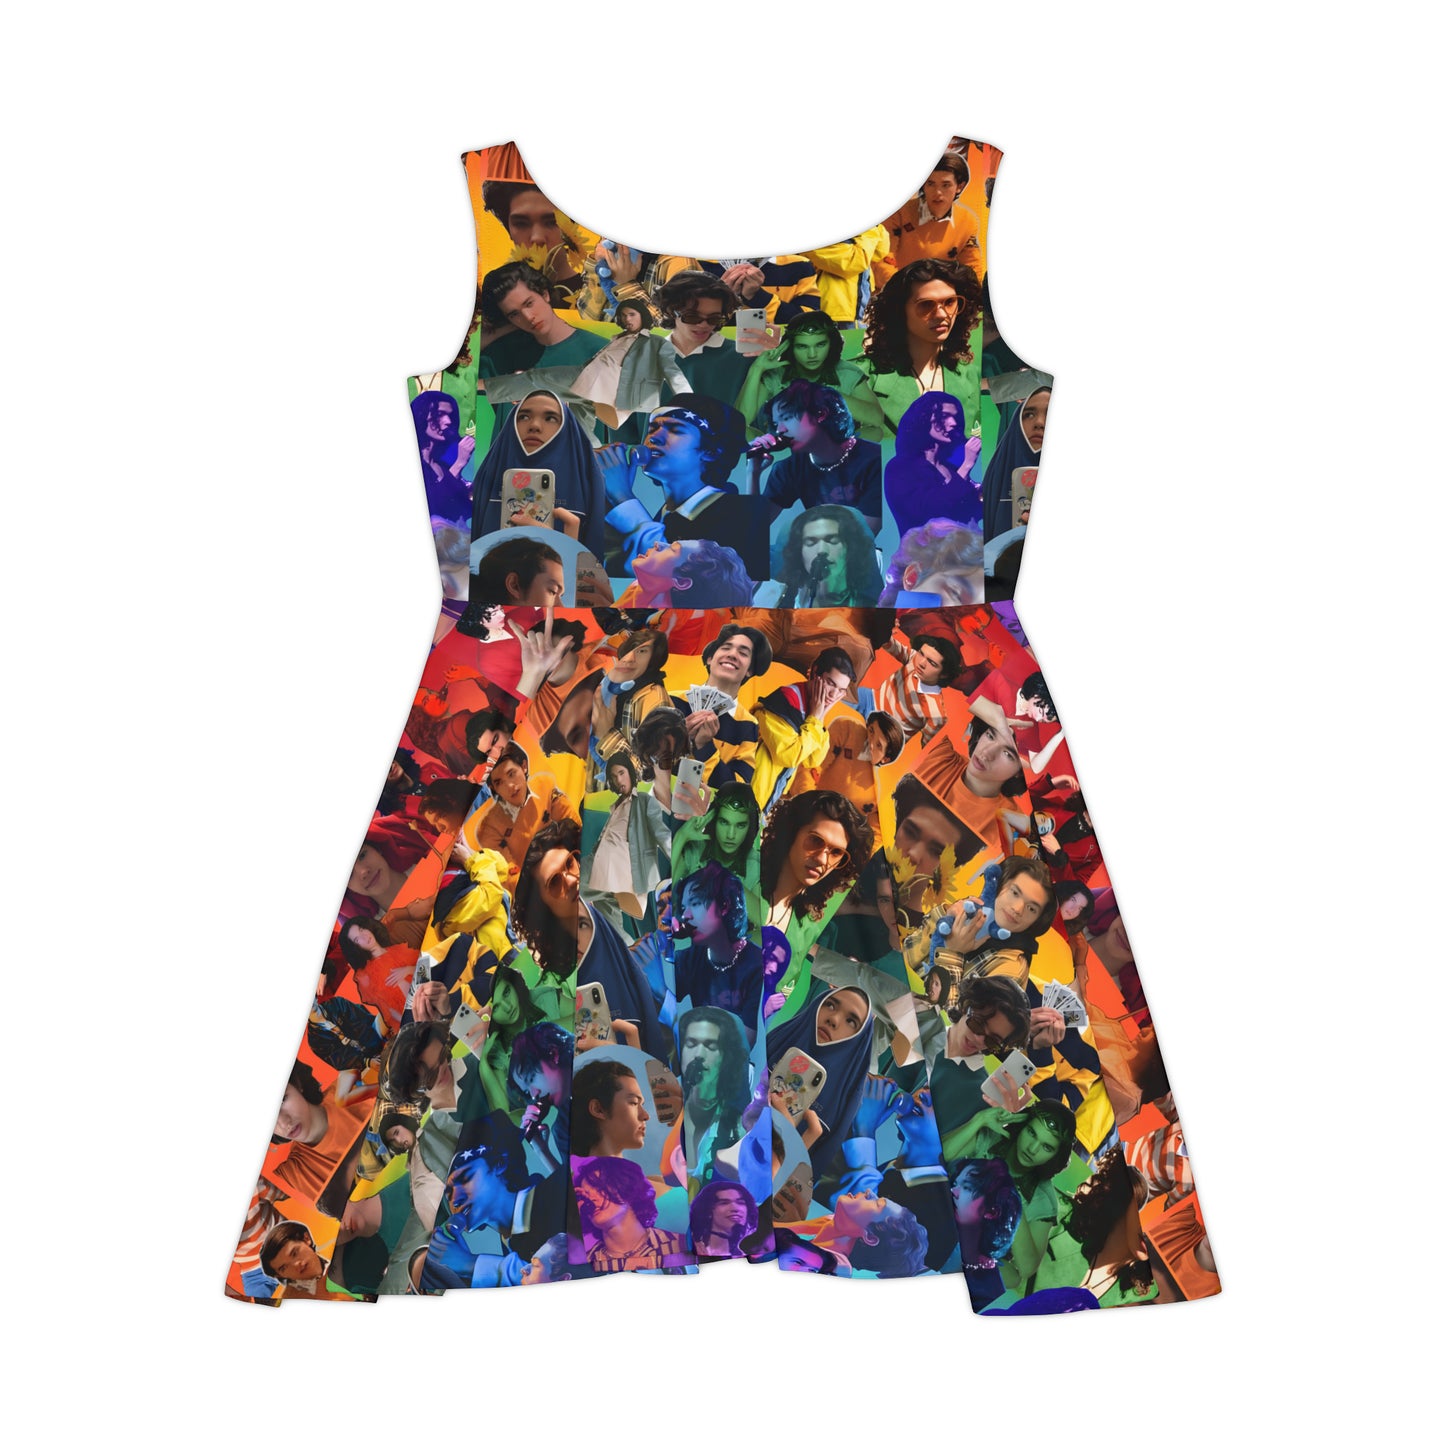 Conan Grey Rainbow Photo Collage Women's Skater Dress